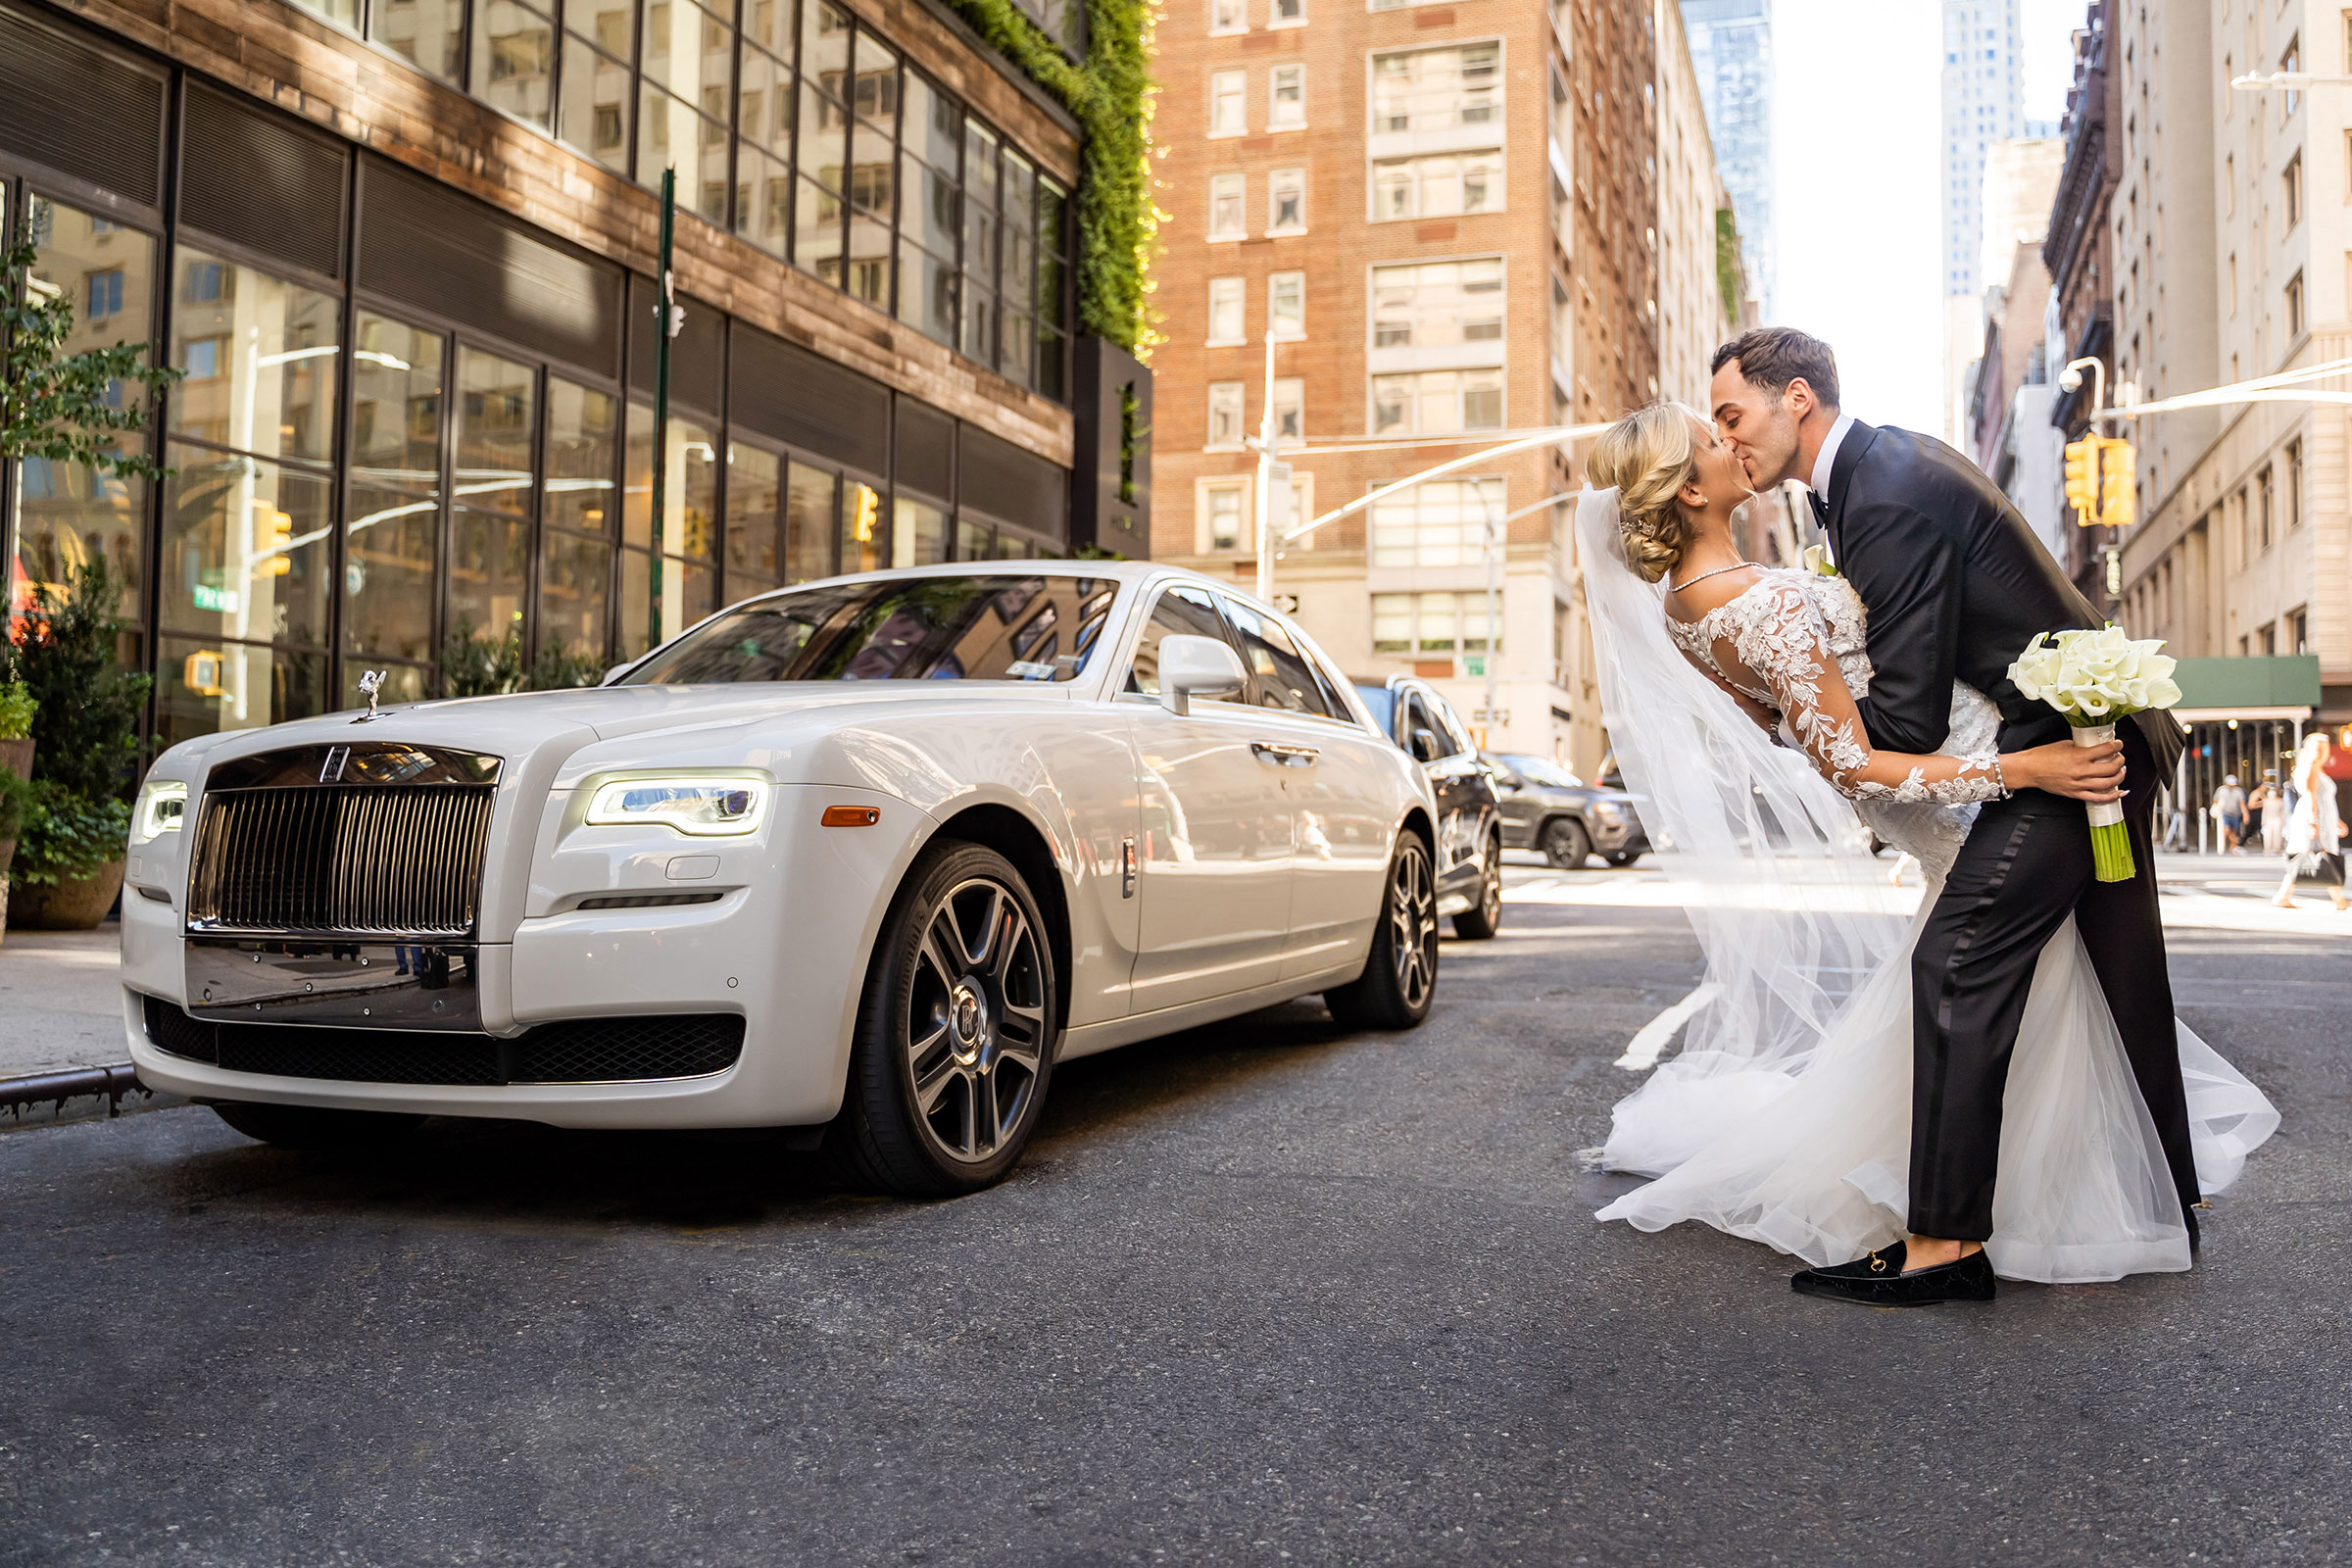 NYC-street-wedding-photo